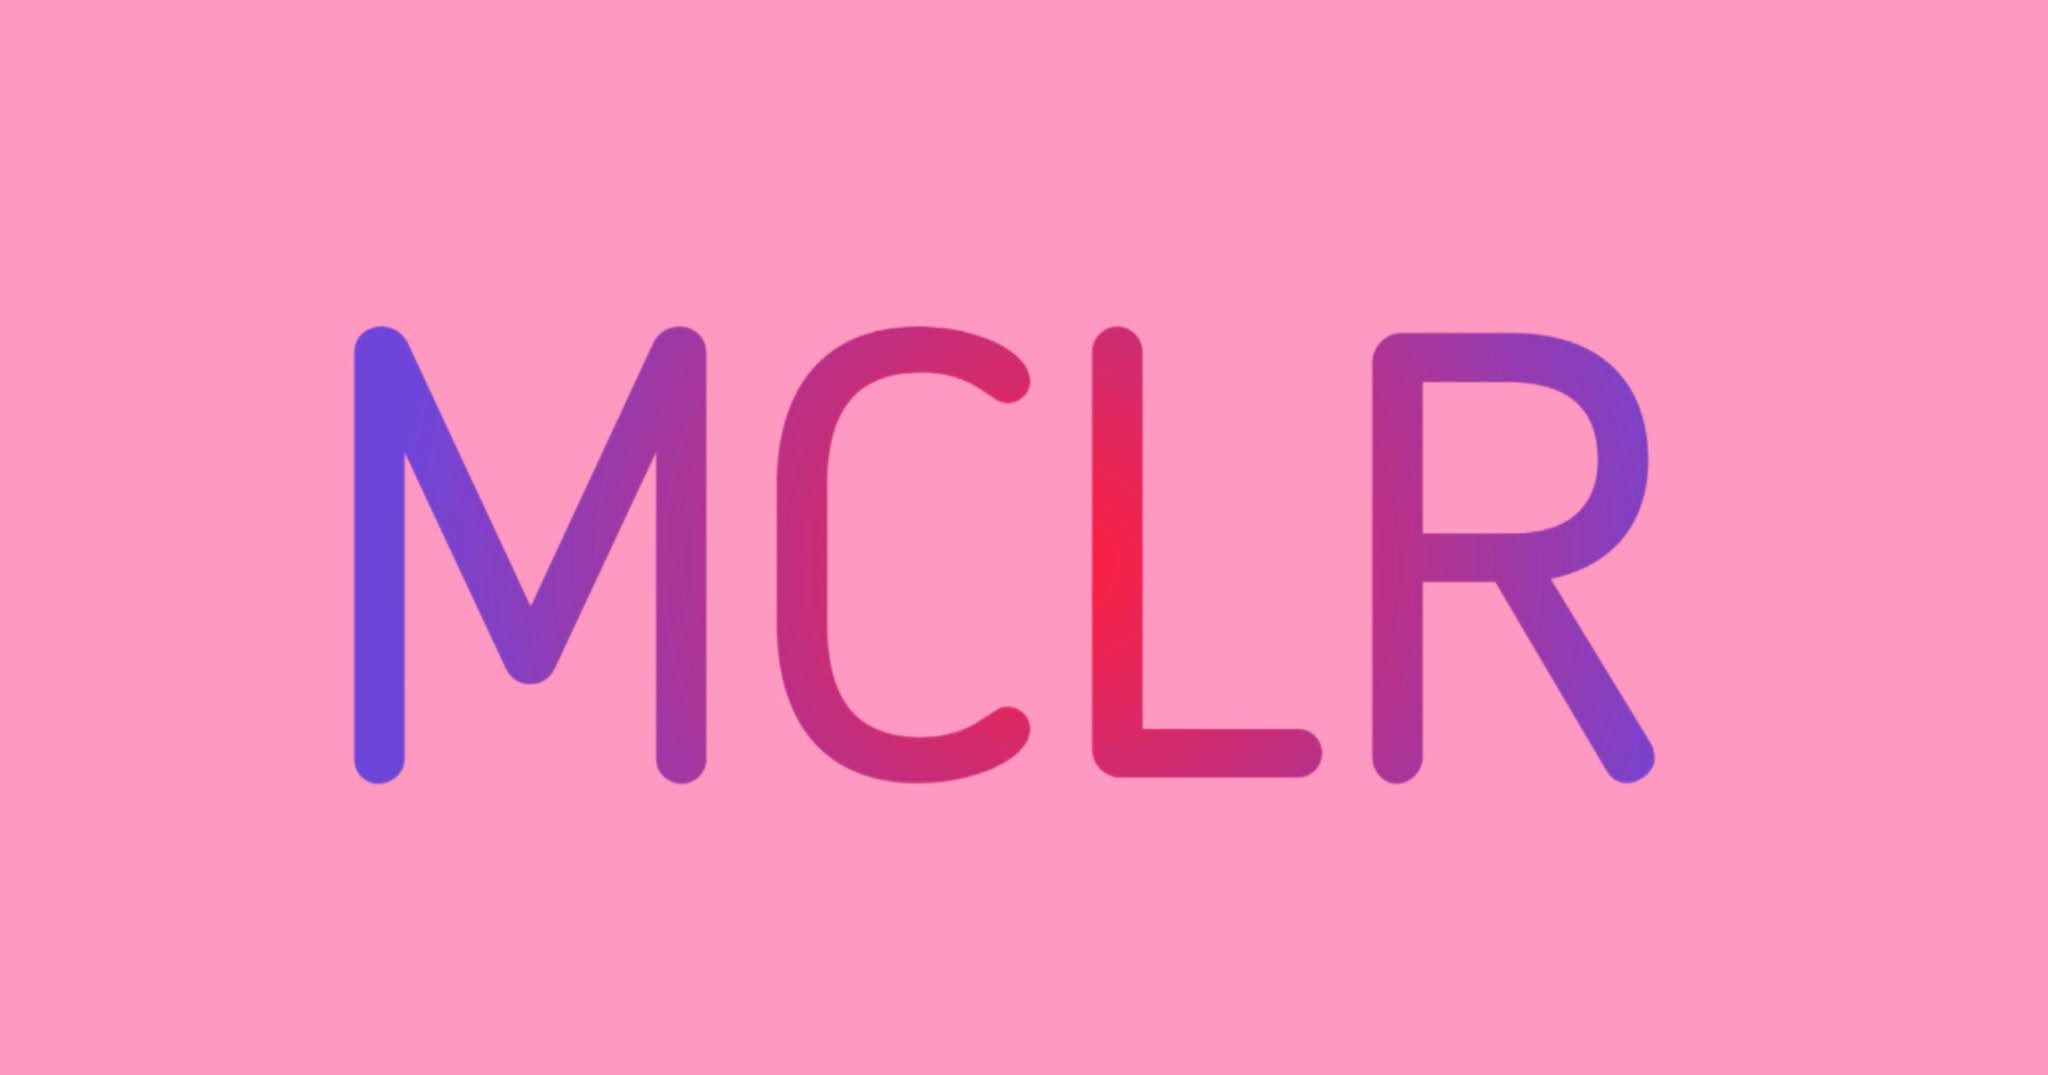 MCLR